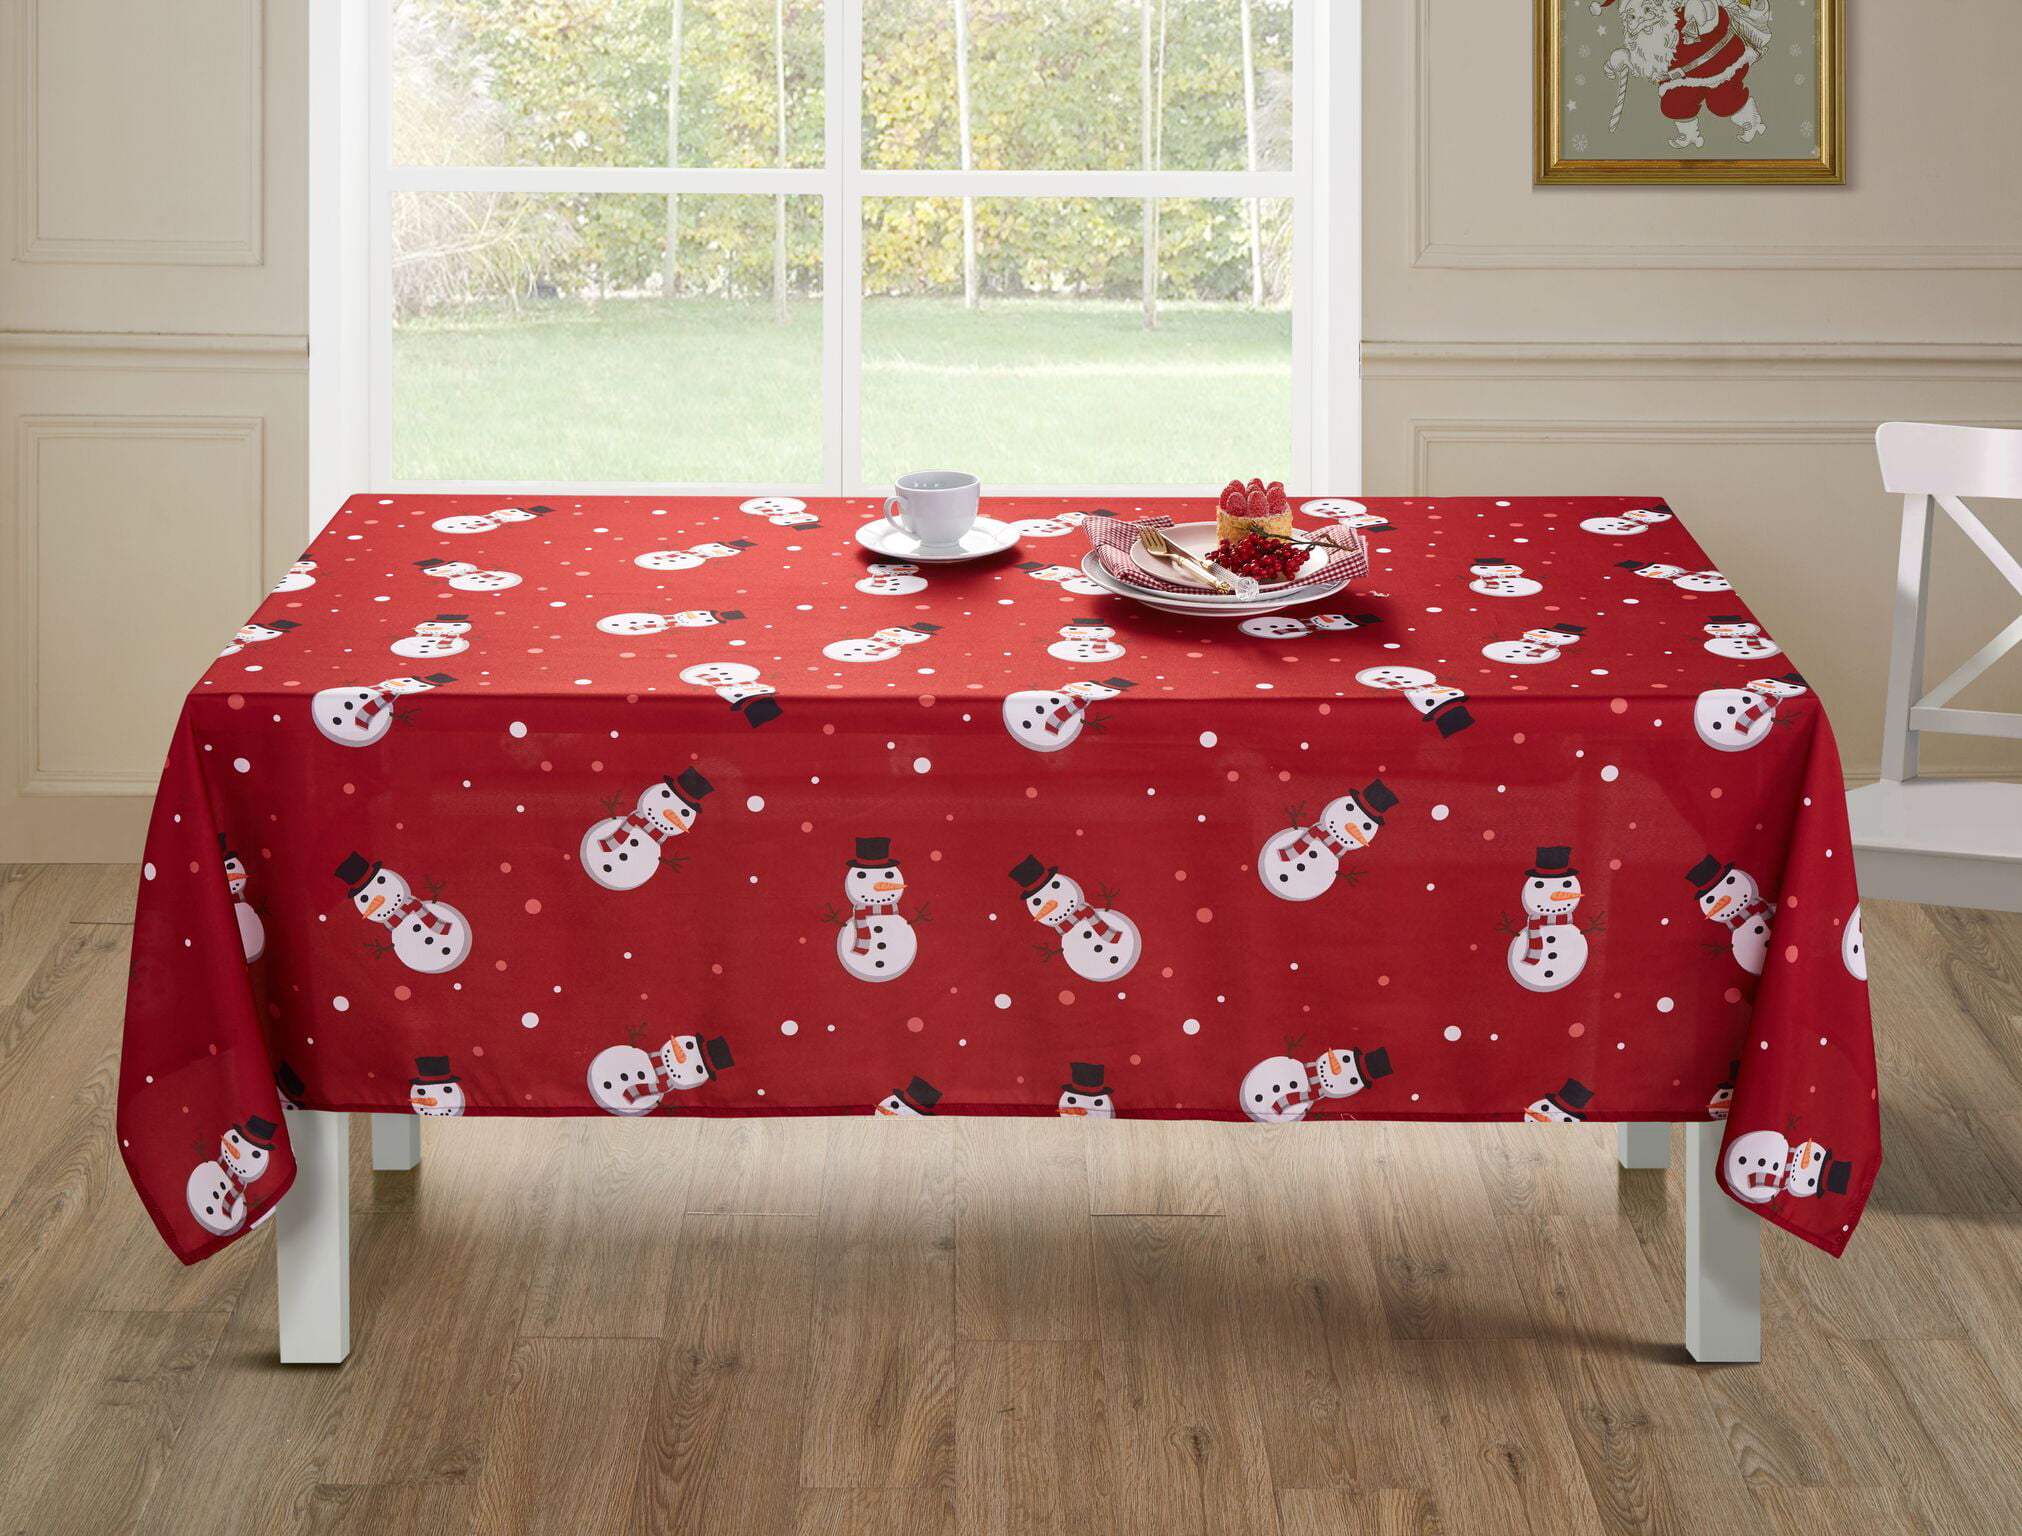 Festive Christmas cotton tablecloth